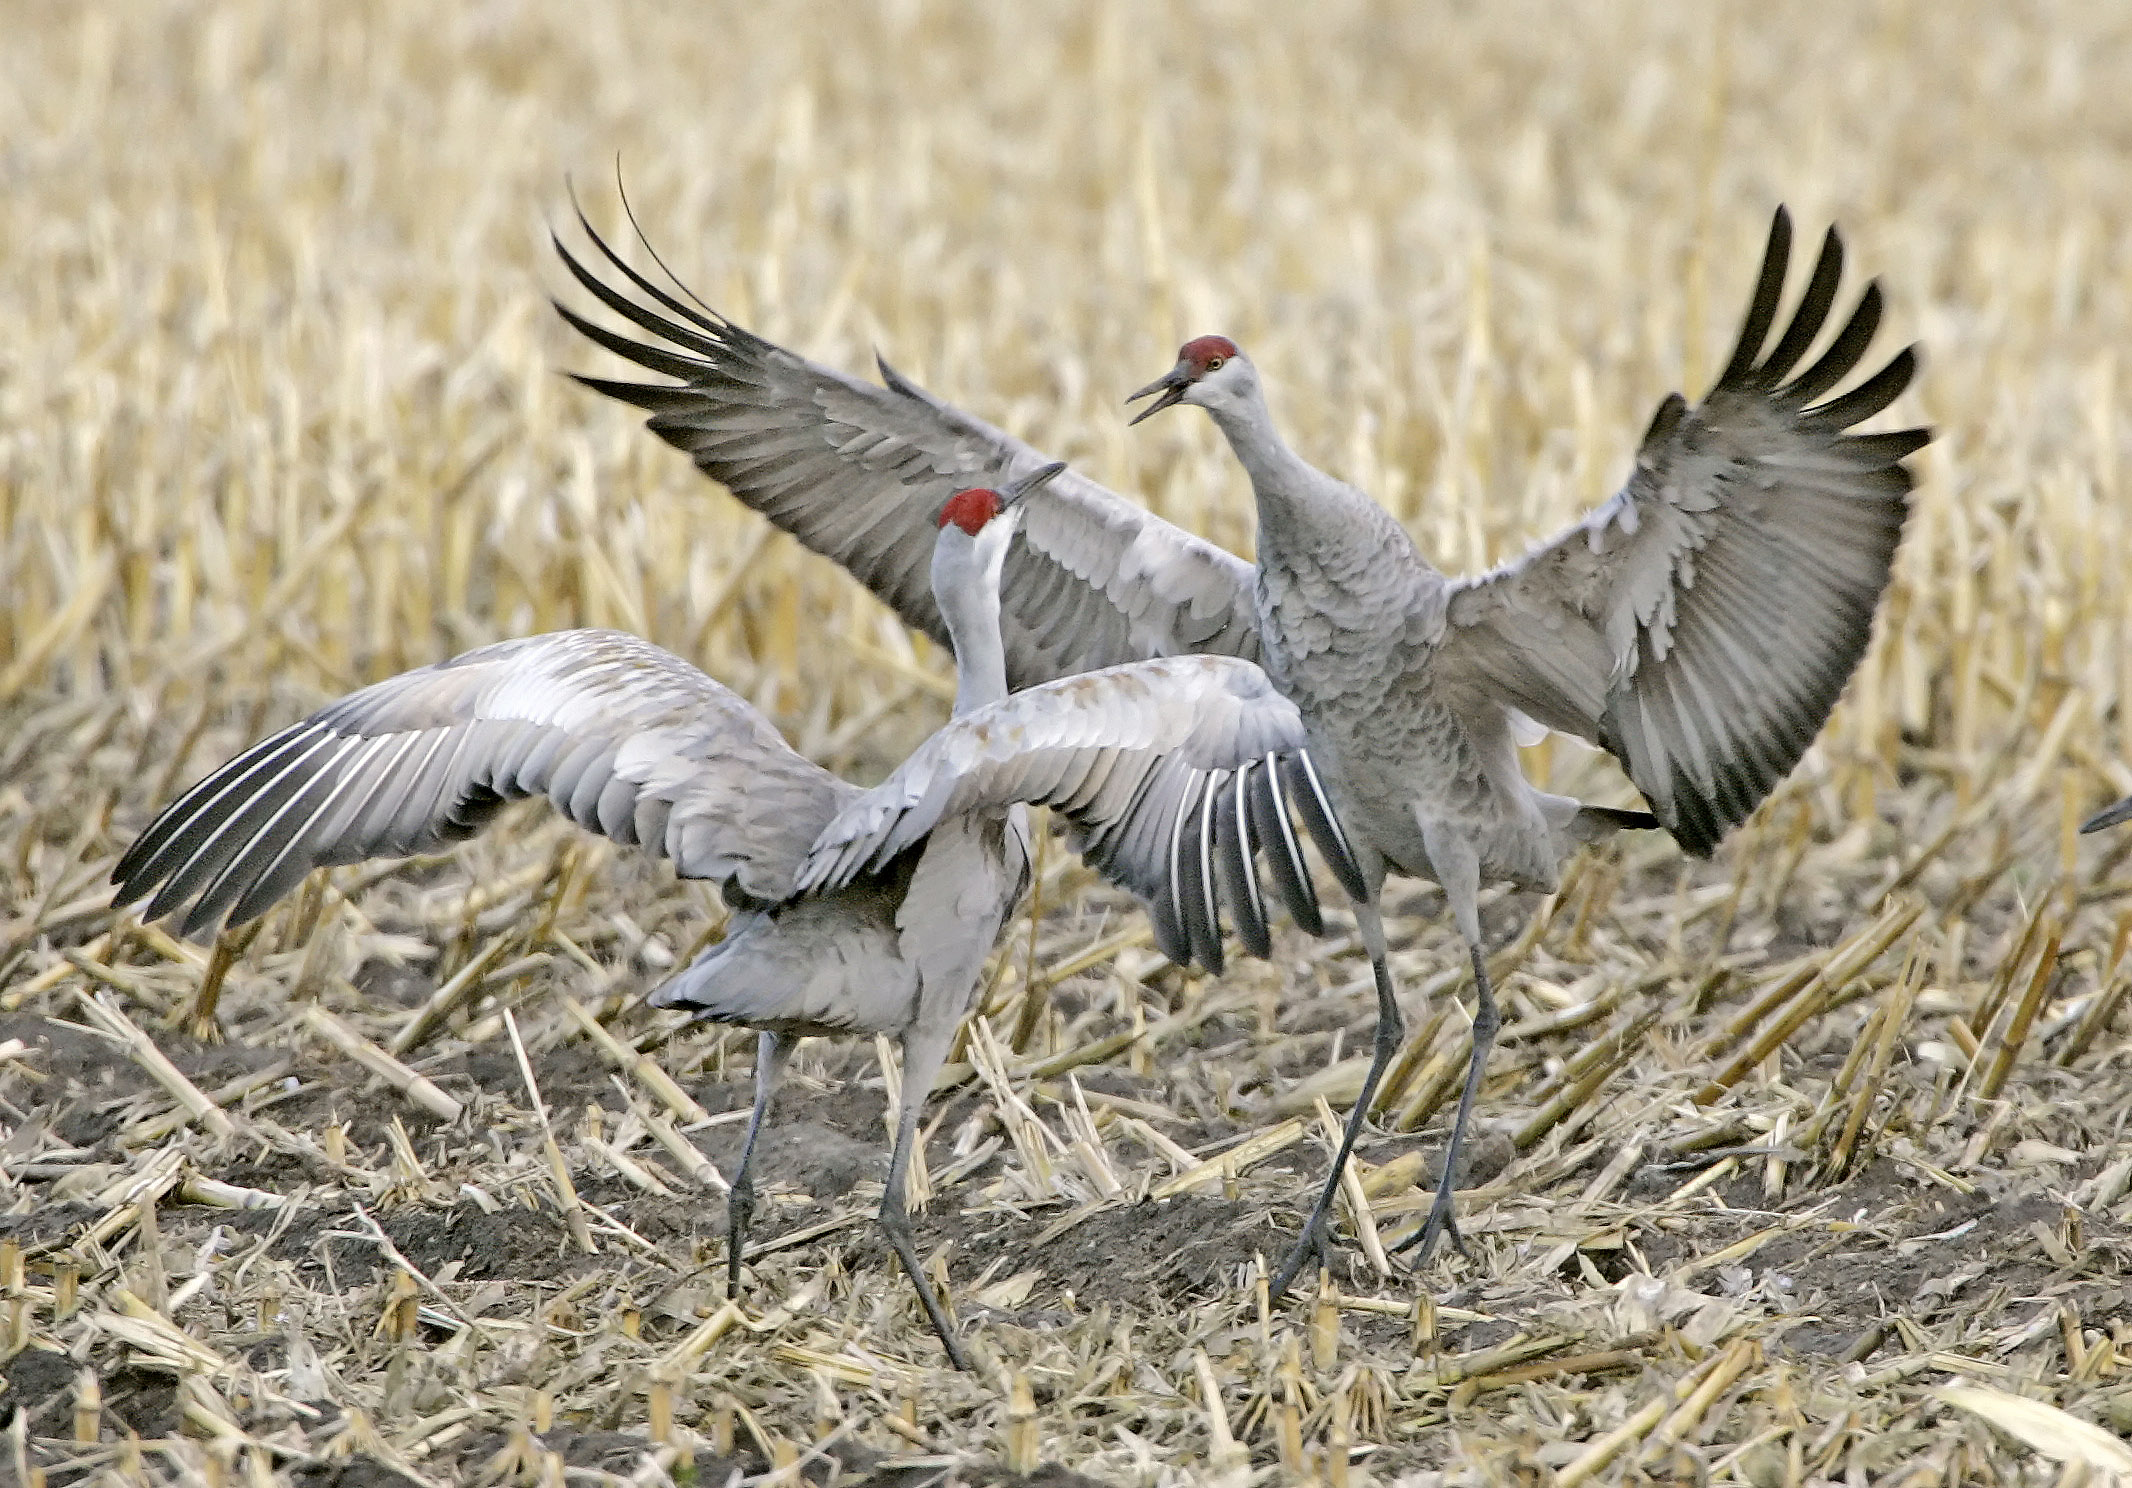 Two sandhill cranes in a field